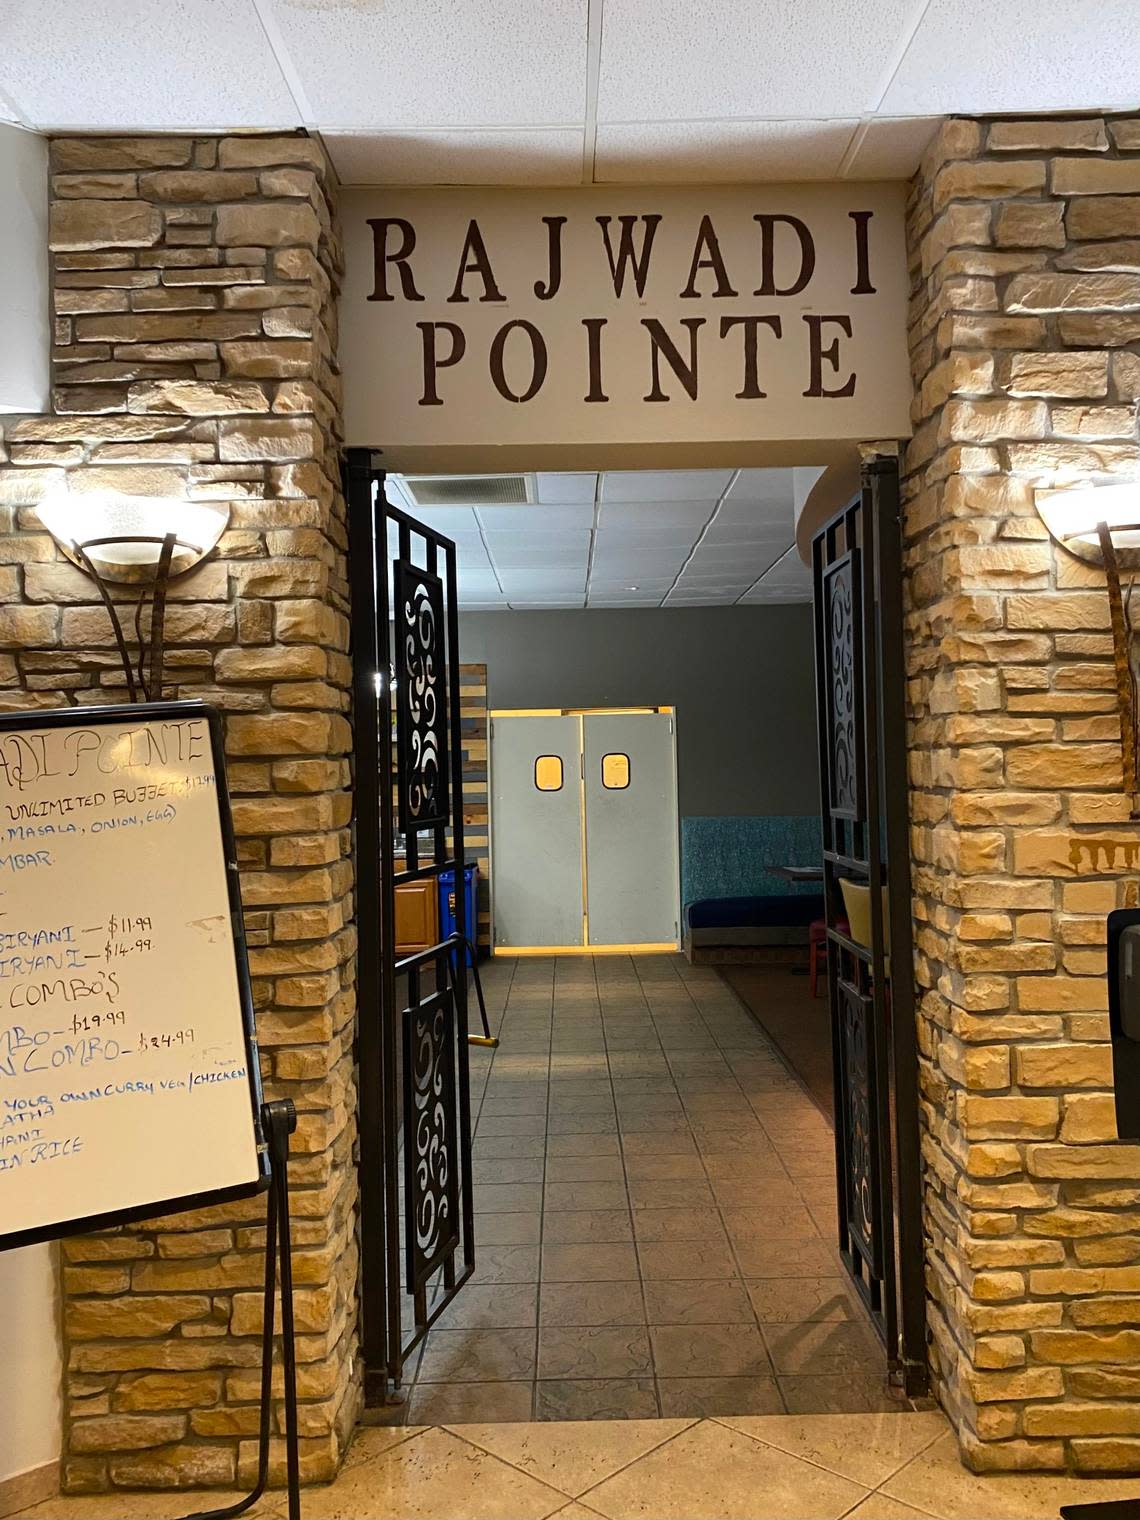 Rajwadi Pointe is a new Indian restaurant operating inside the Wyndham Garden Inn at 221 E. Kellogg in Wichita. Denise Neil/The Wichita Eagle